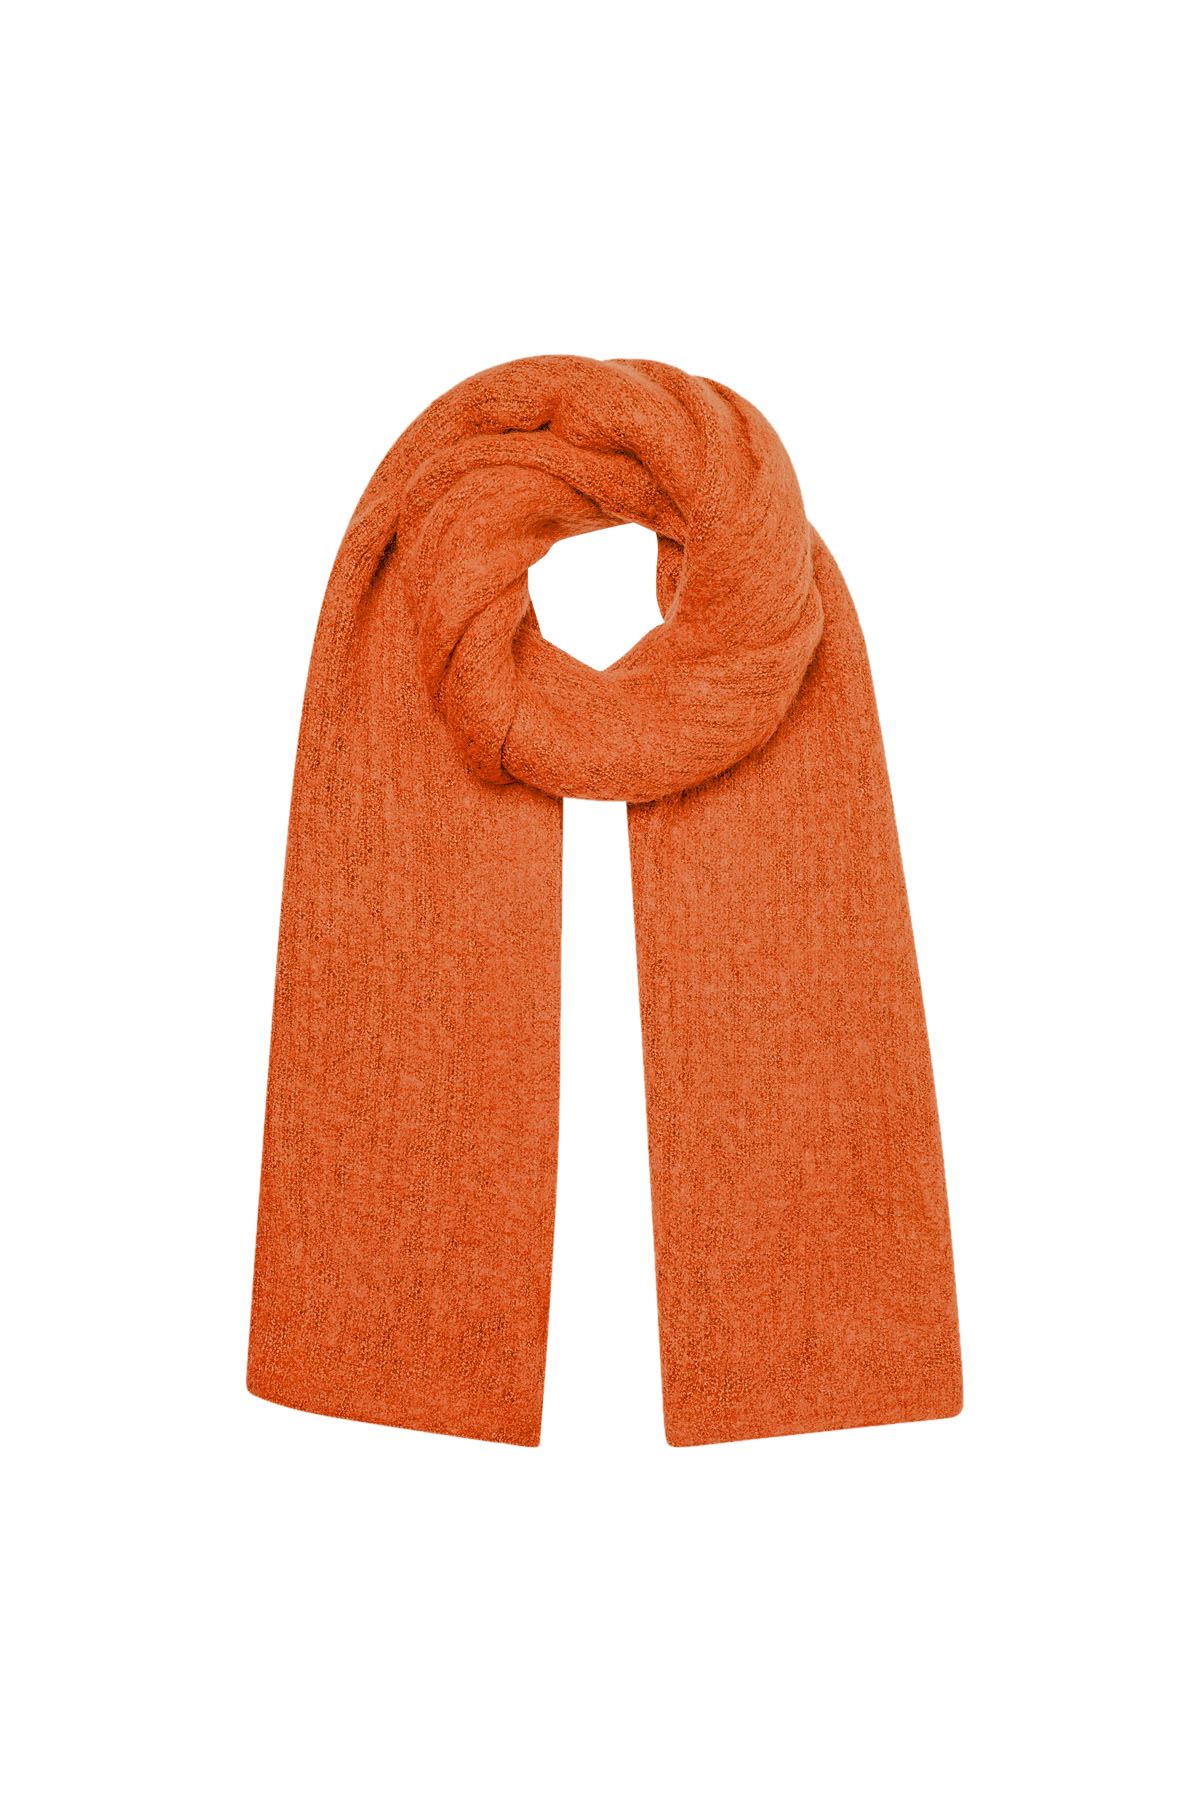 Scarf knitted plain - orange h5 